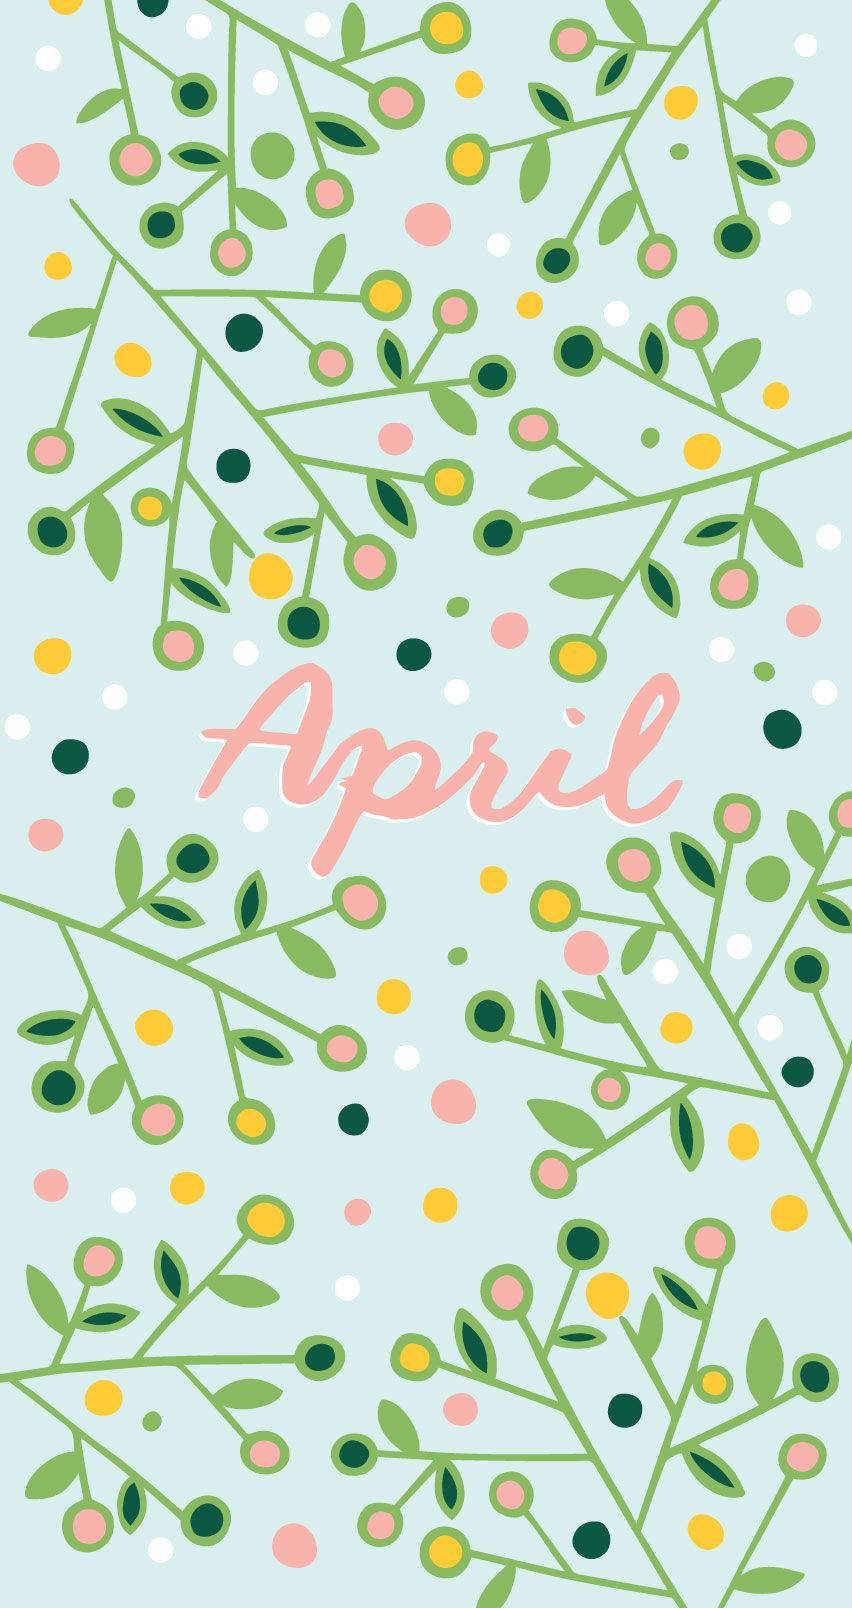 Celebrate Spring's beauty with April’s floral digital artwork. Wallpaper